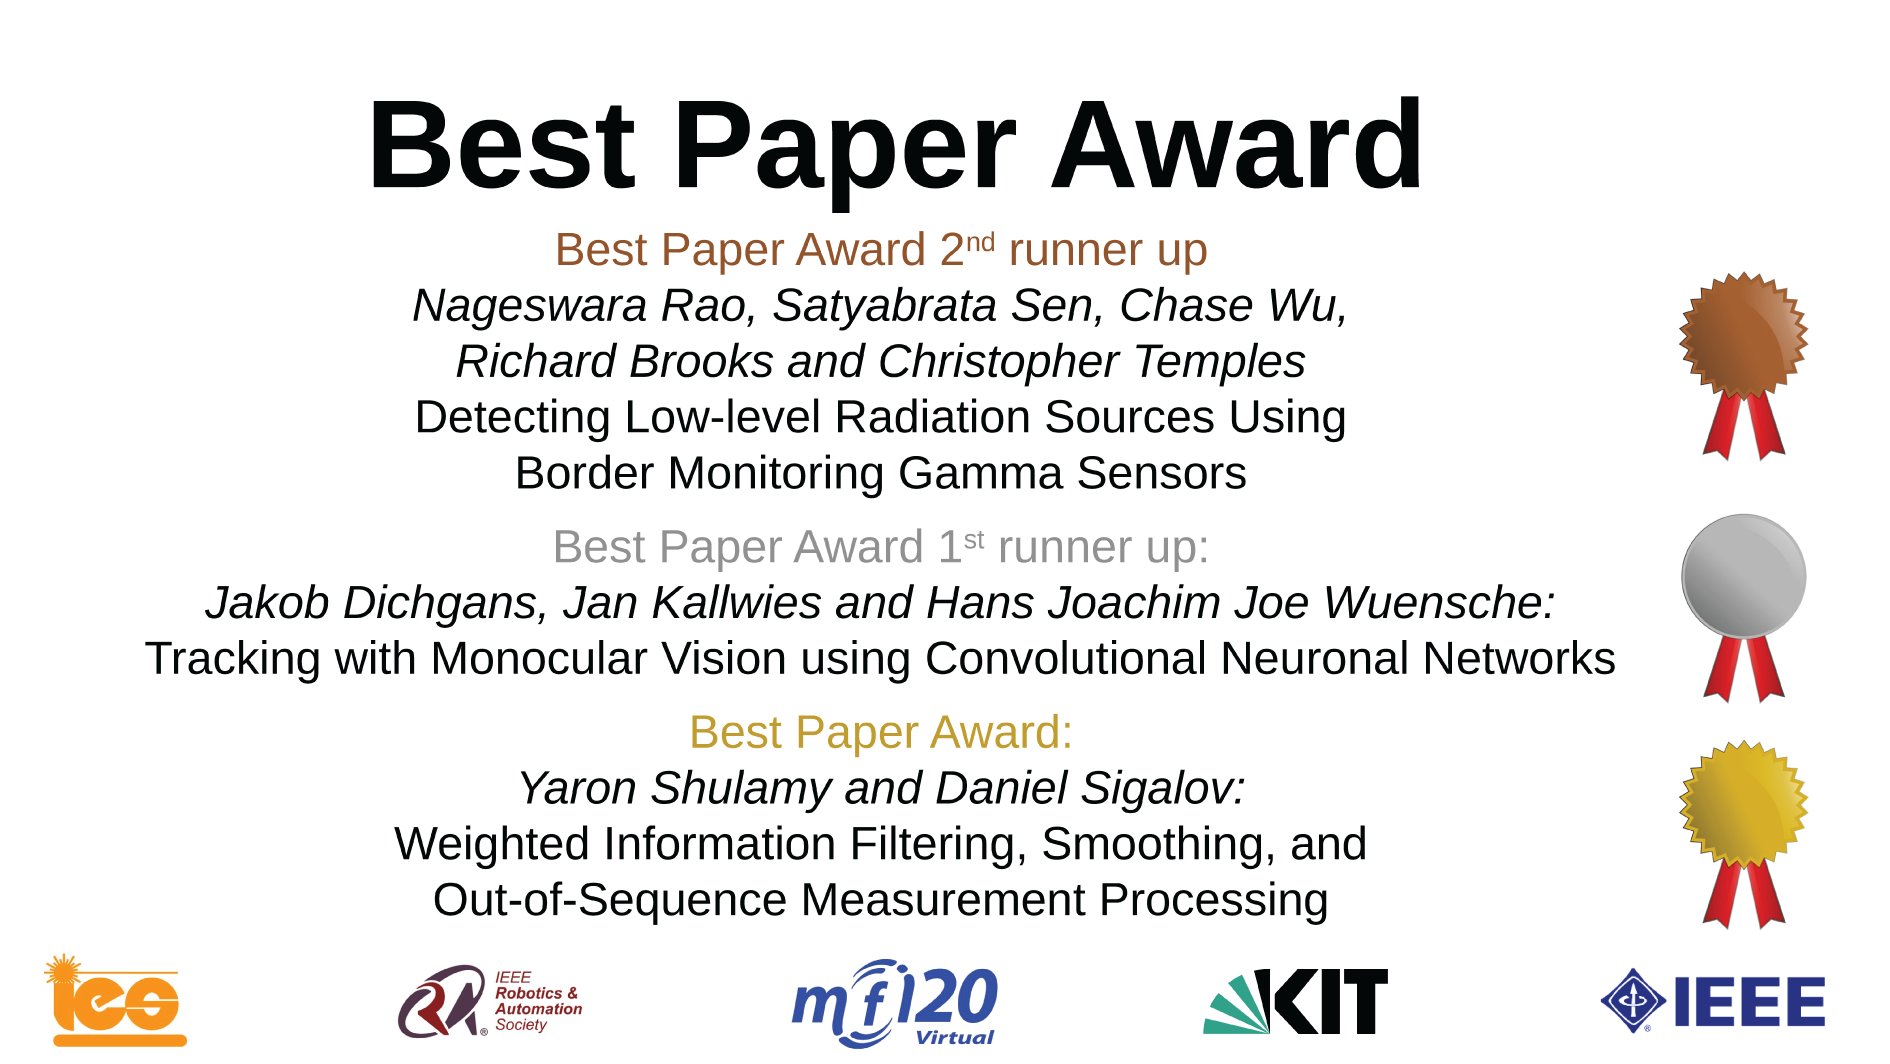 MFI 2020 Best Paper Award